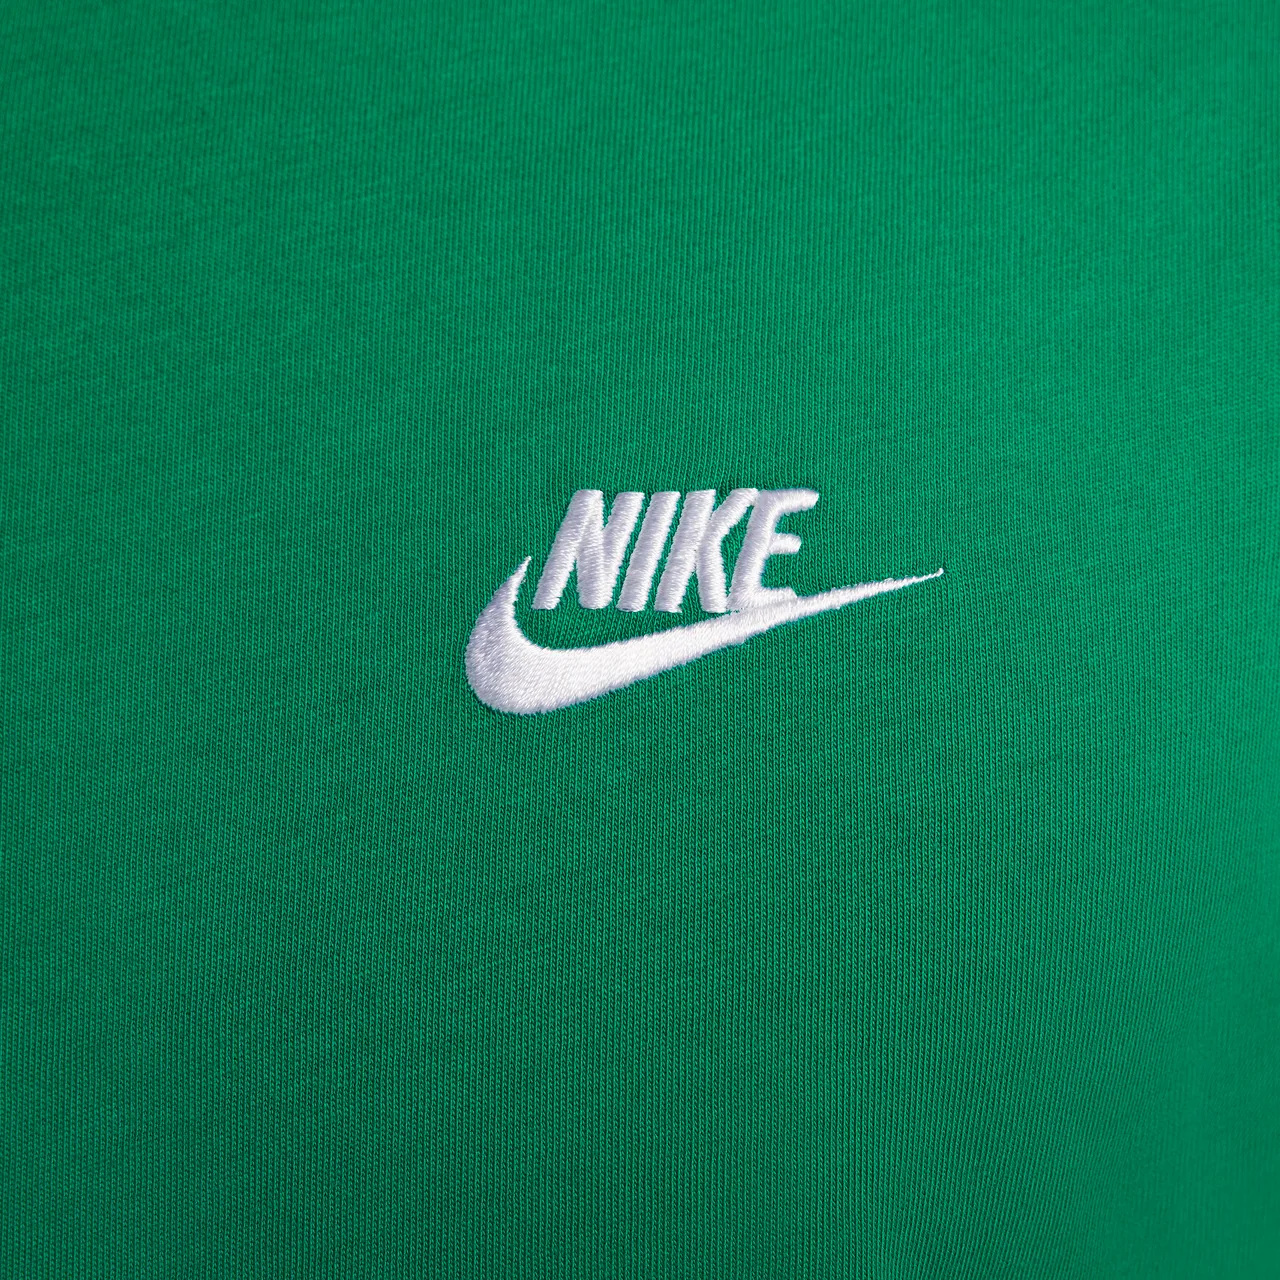 Nike Sportswear Club T-shirt voor heren - Groen